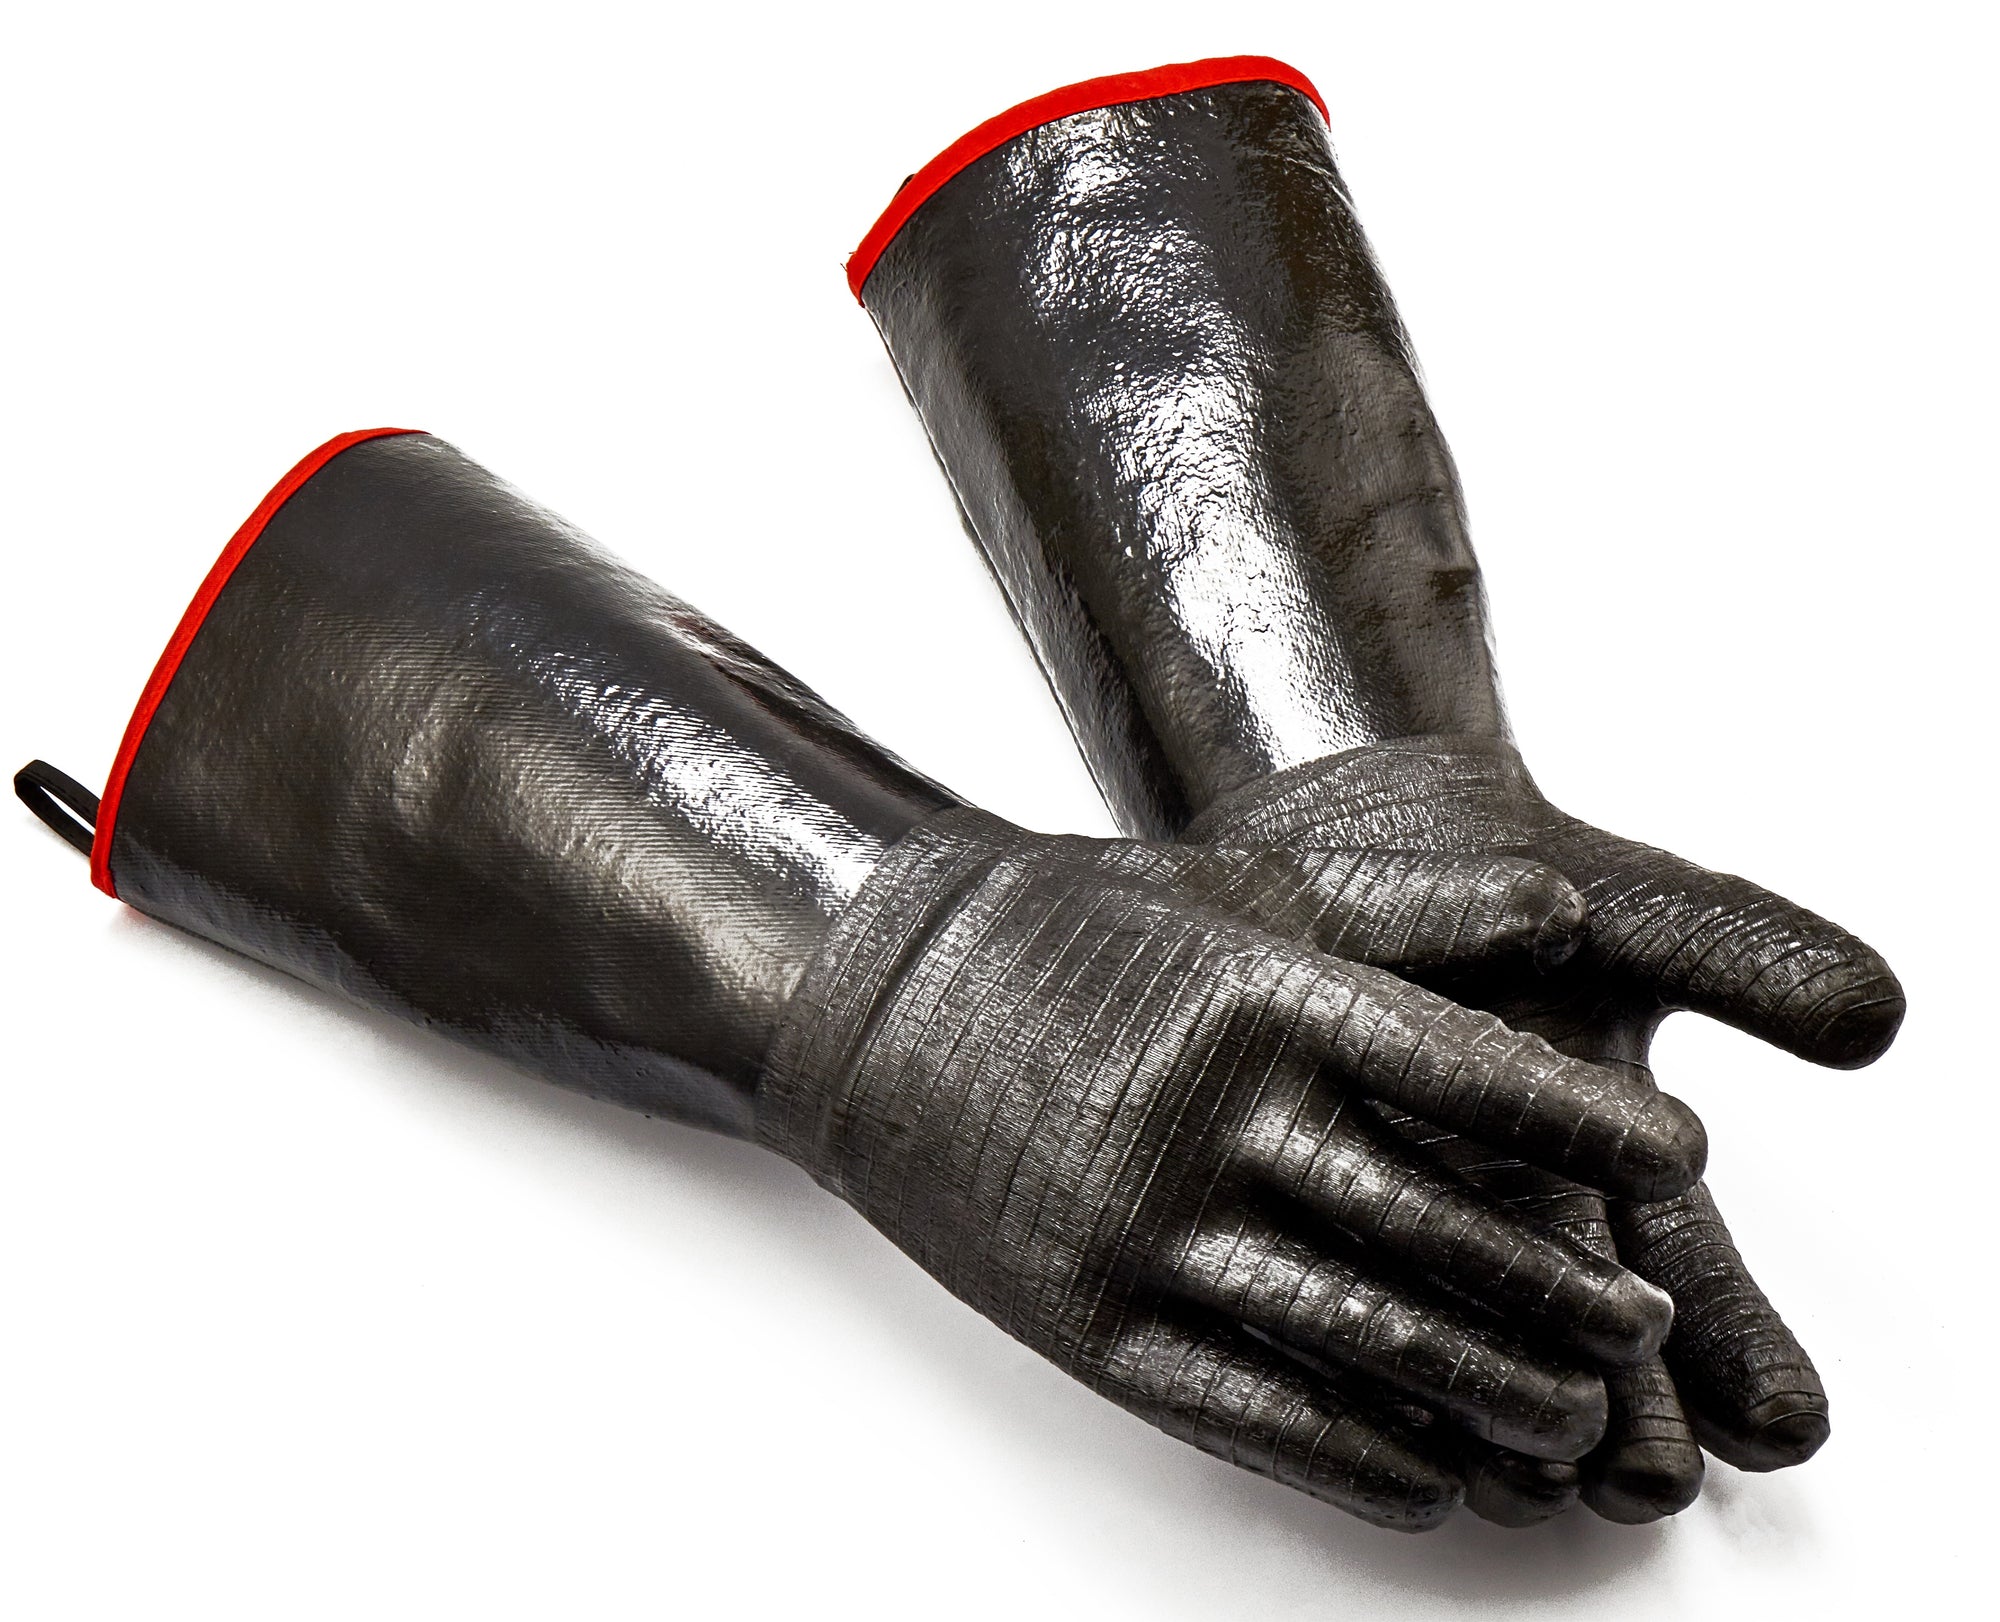 15 Best Heat-Resistant Gloves For Grilling - Top Picks Of 2023